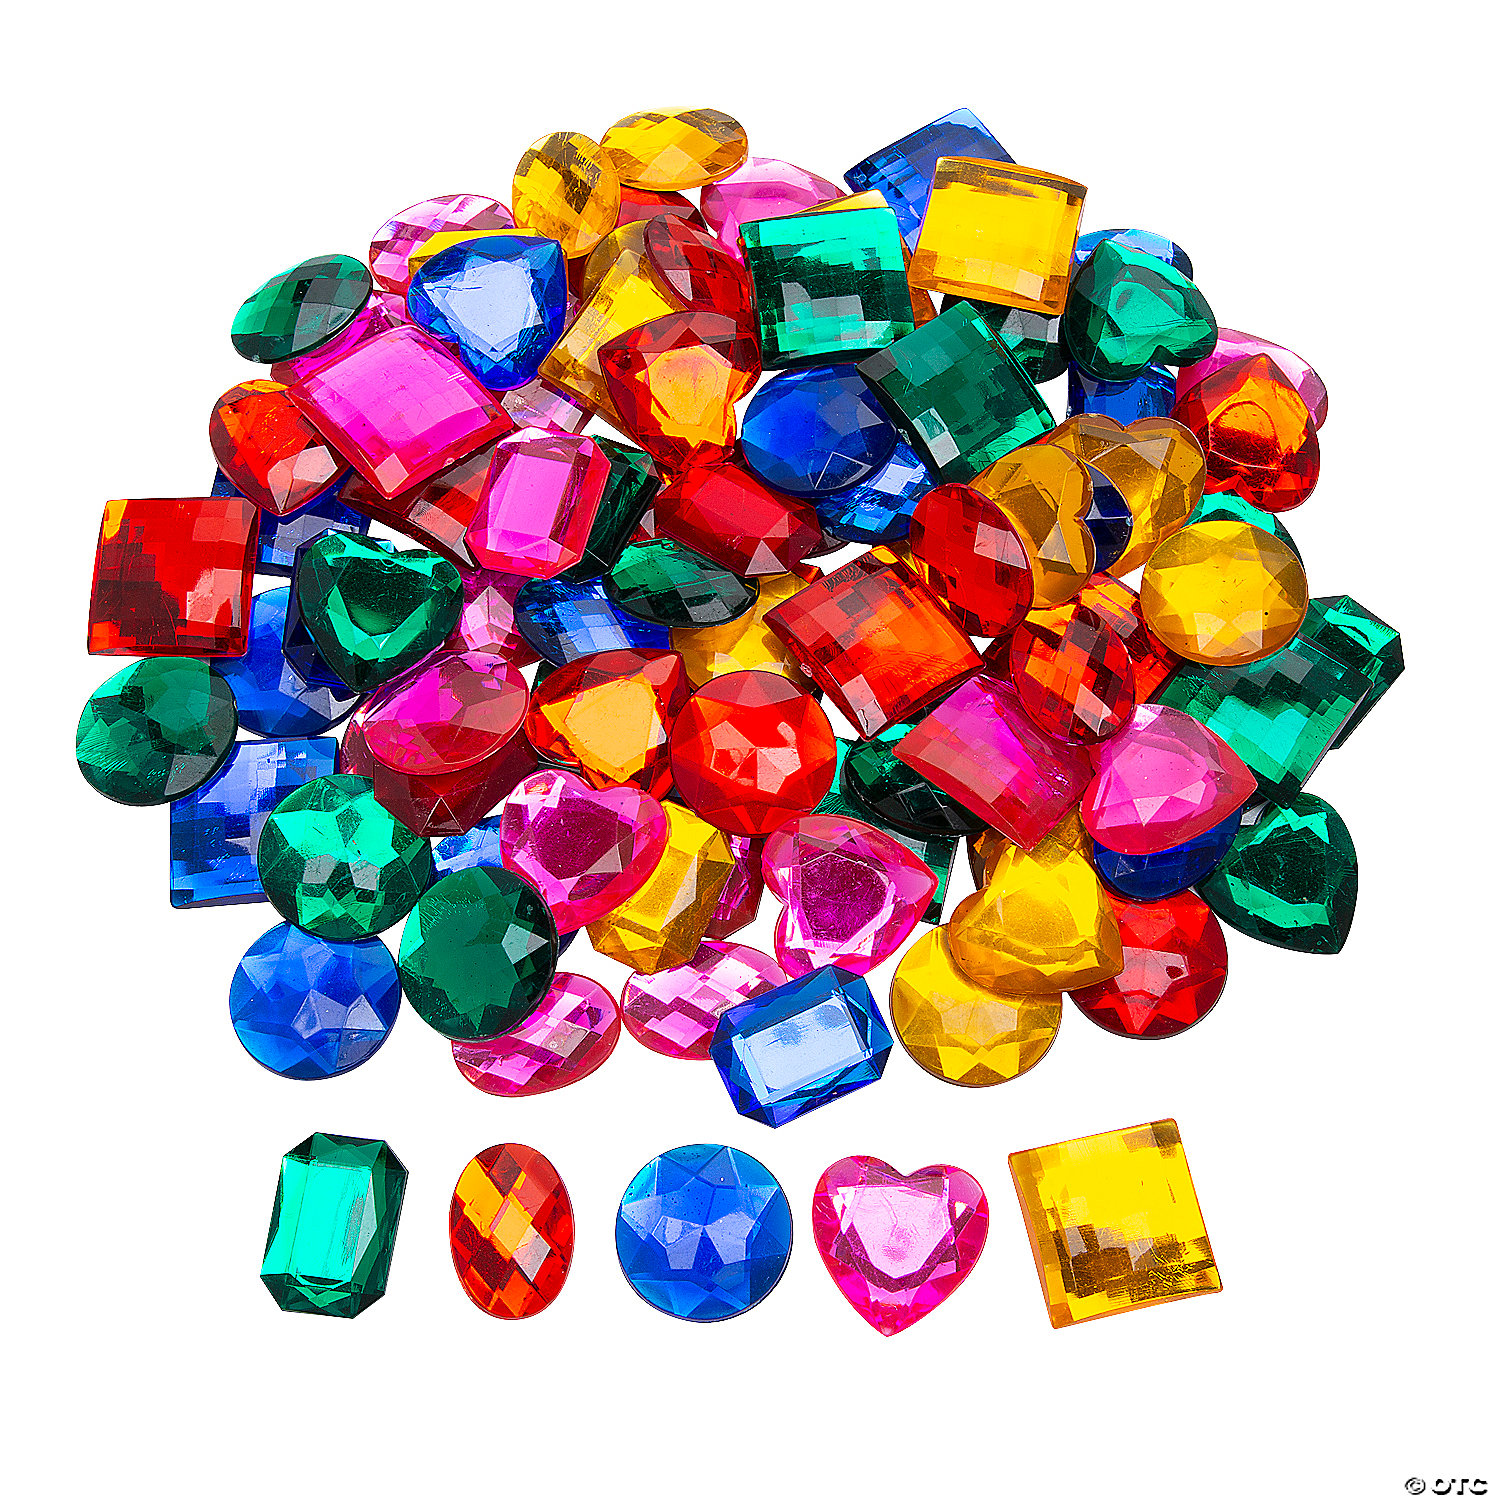 Oriental Trading Company New packs Adhesive Back Geometric Jewels 500 pc 